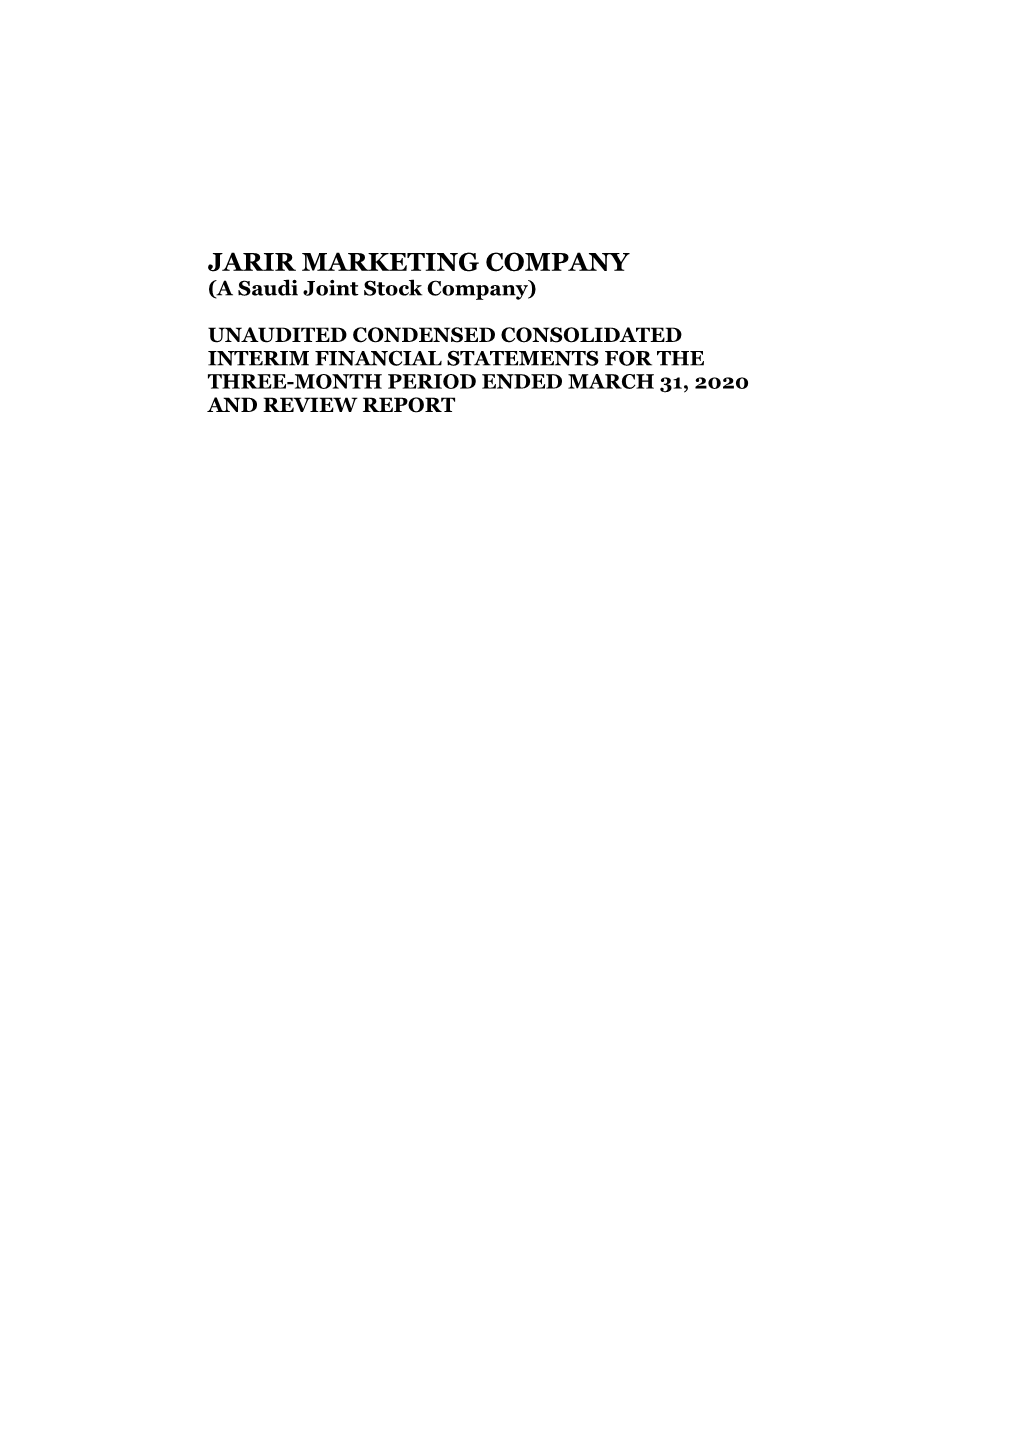 JARIR MARKETING COMPANY (A Saudi Joint Stock Company)